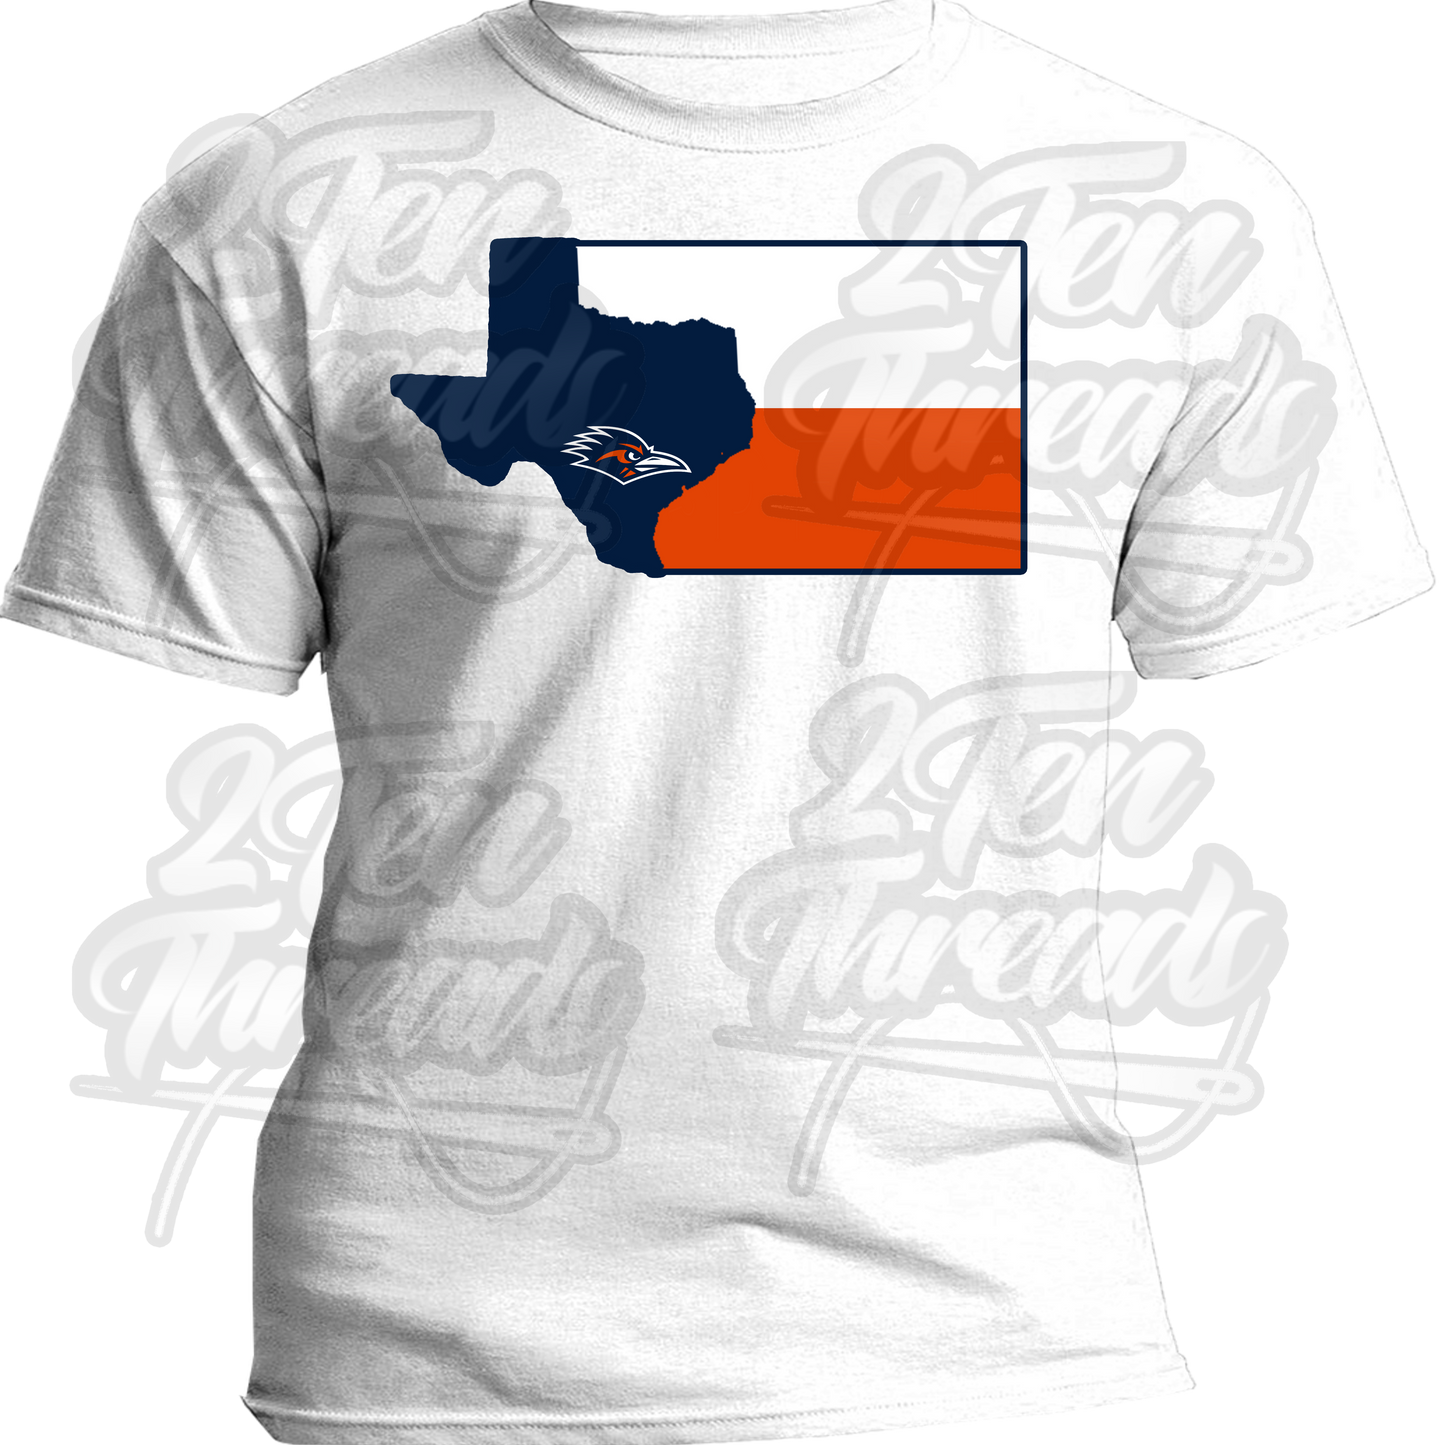 State of Texas Road Runner Shirt